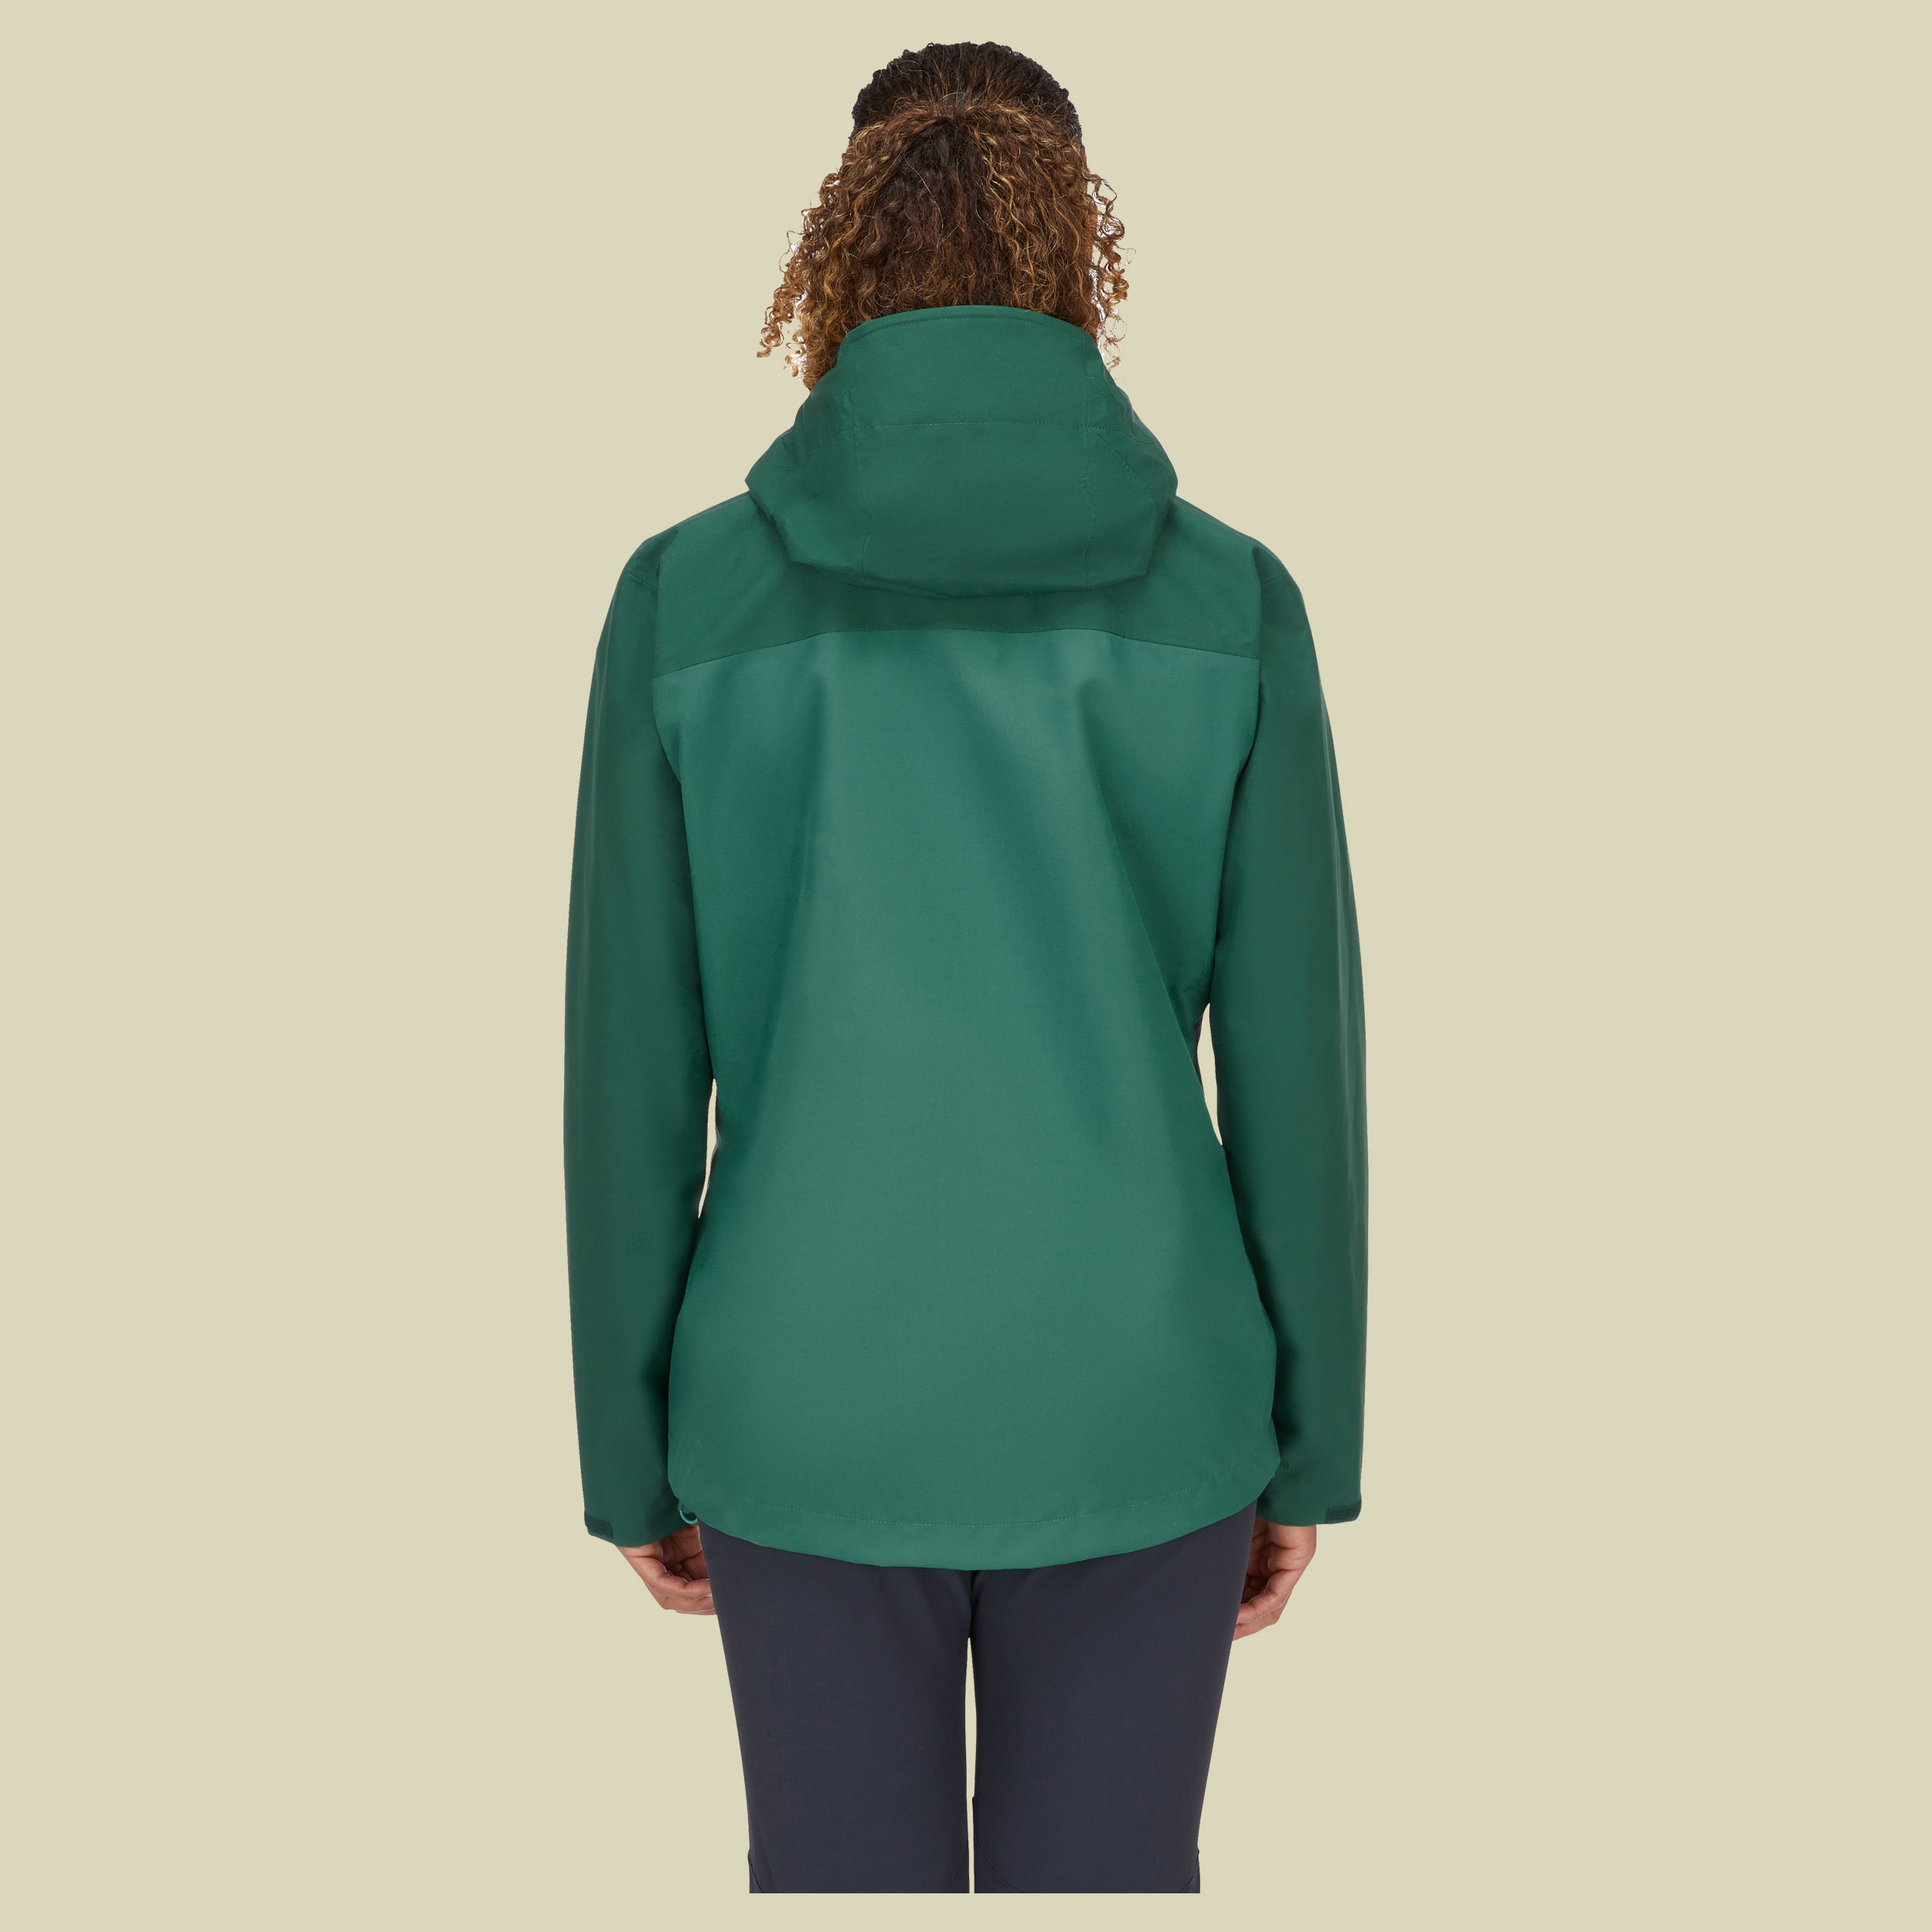 Arc Eco Jacket Women Größe 38 (10) Farbe green slate/eucalyptus